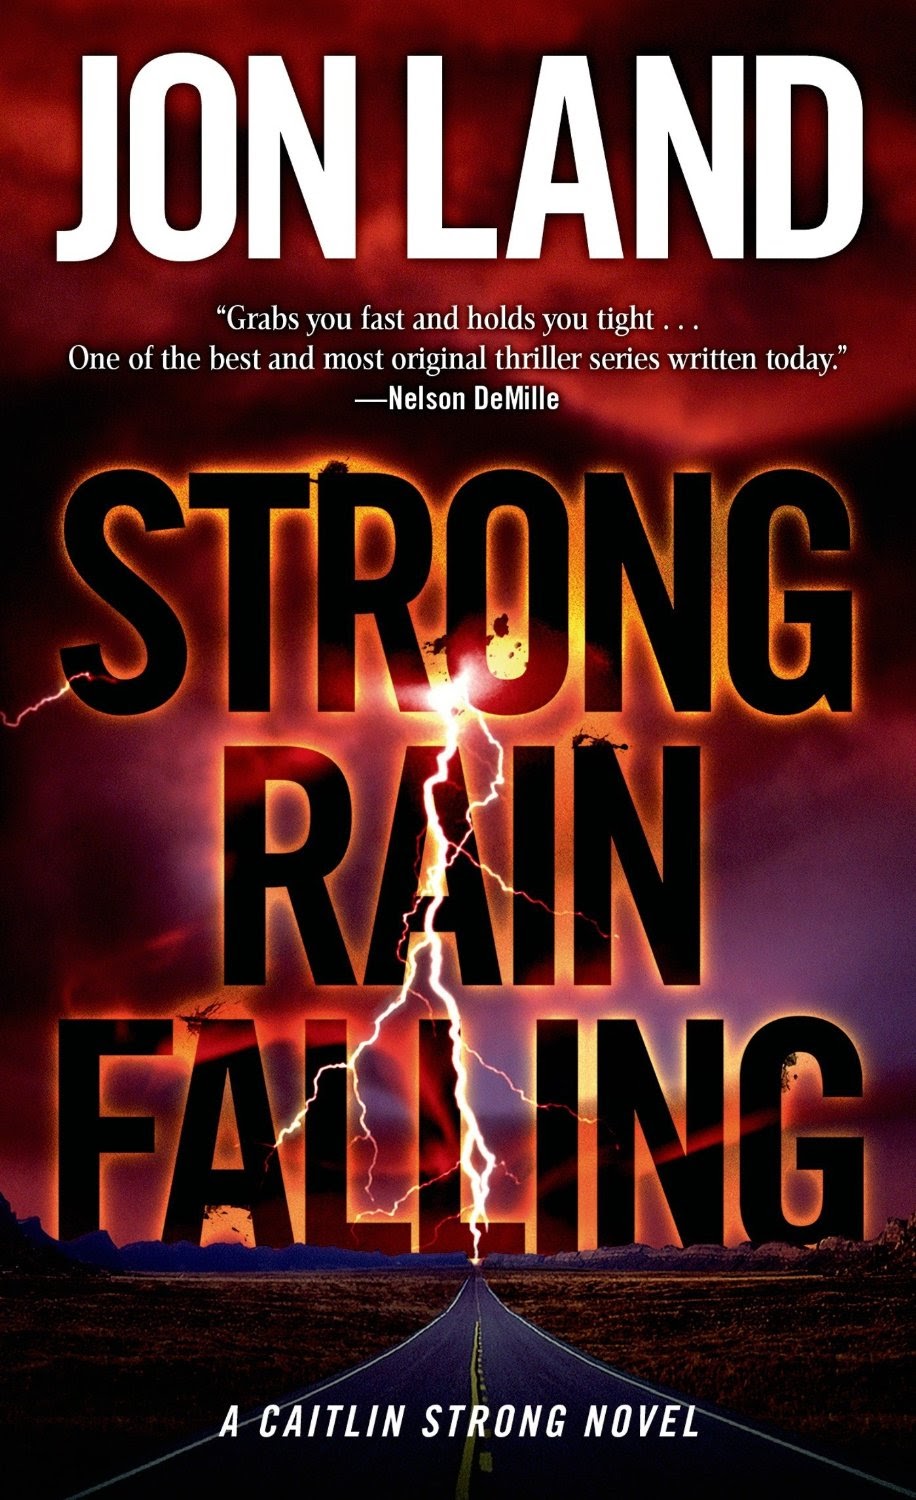 BooksChatter: ☀☄ Strong Light of Day: Caitlin Strong [7] - Jon Land